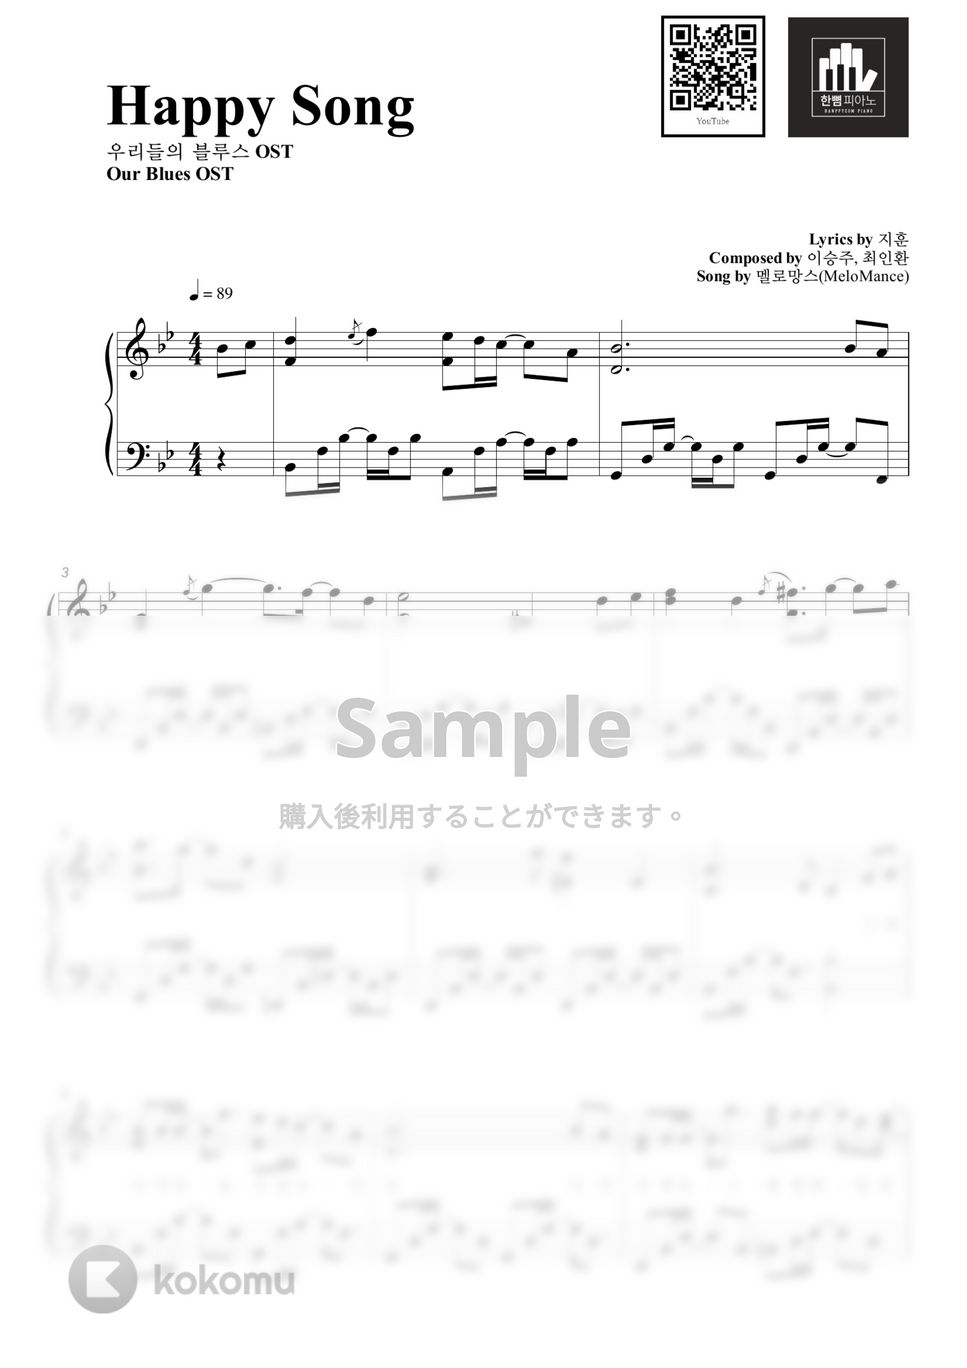 MeloMance - Happy Song (PIANO COVER) by HANPPYEOMPIANO